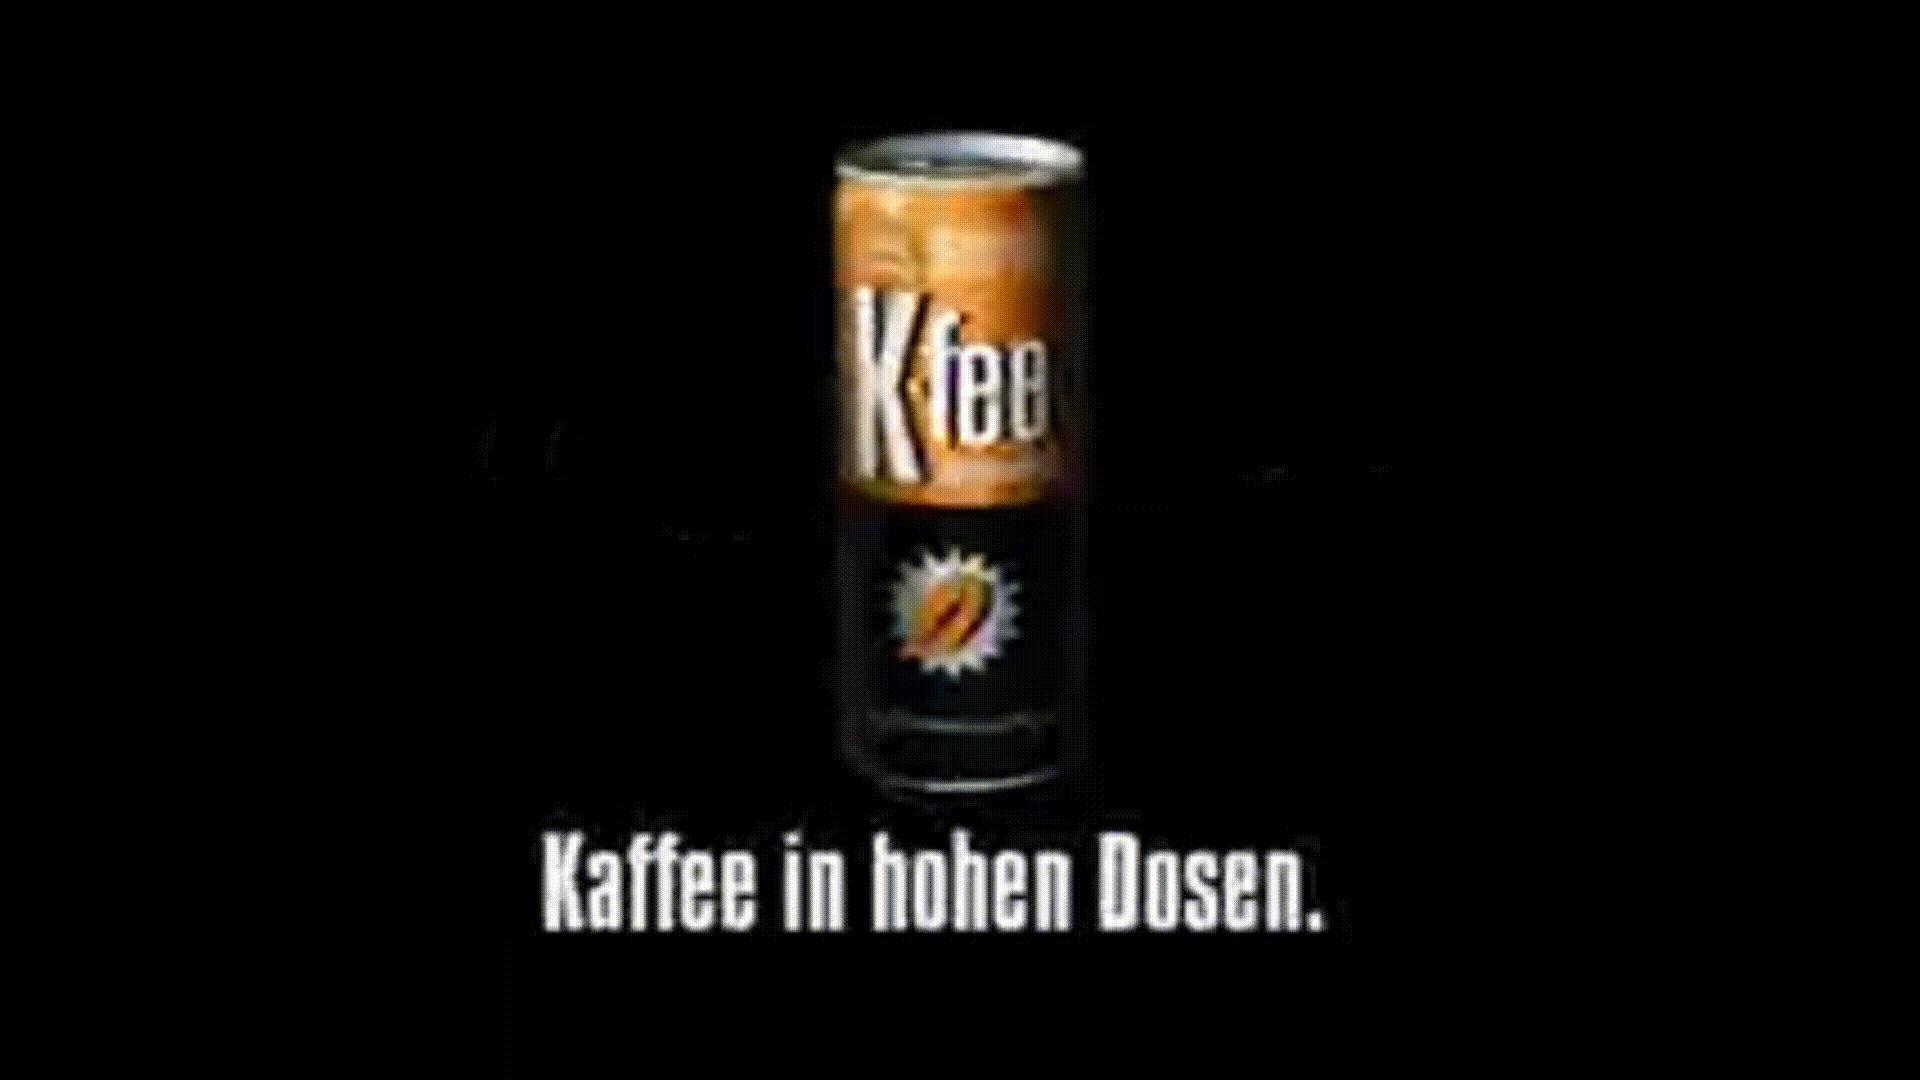 Last few seconds of Kfee auto advertisement. Kfee canned drink pulsating.